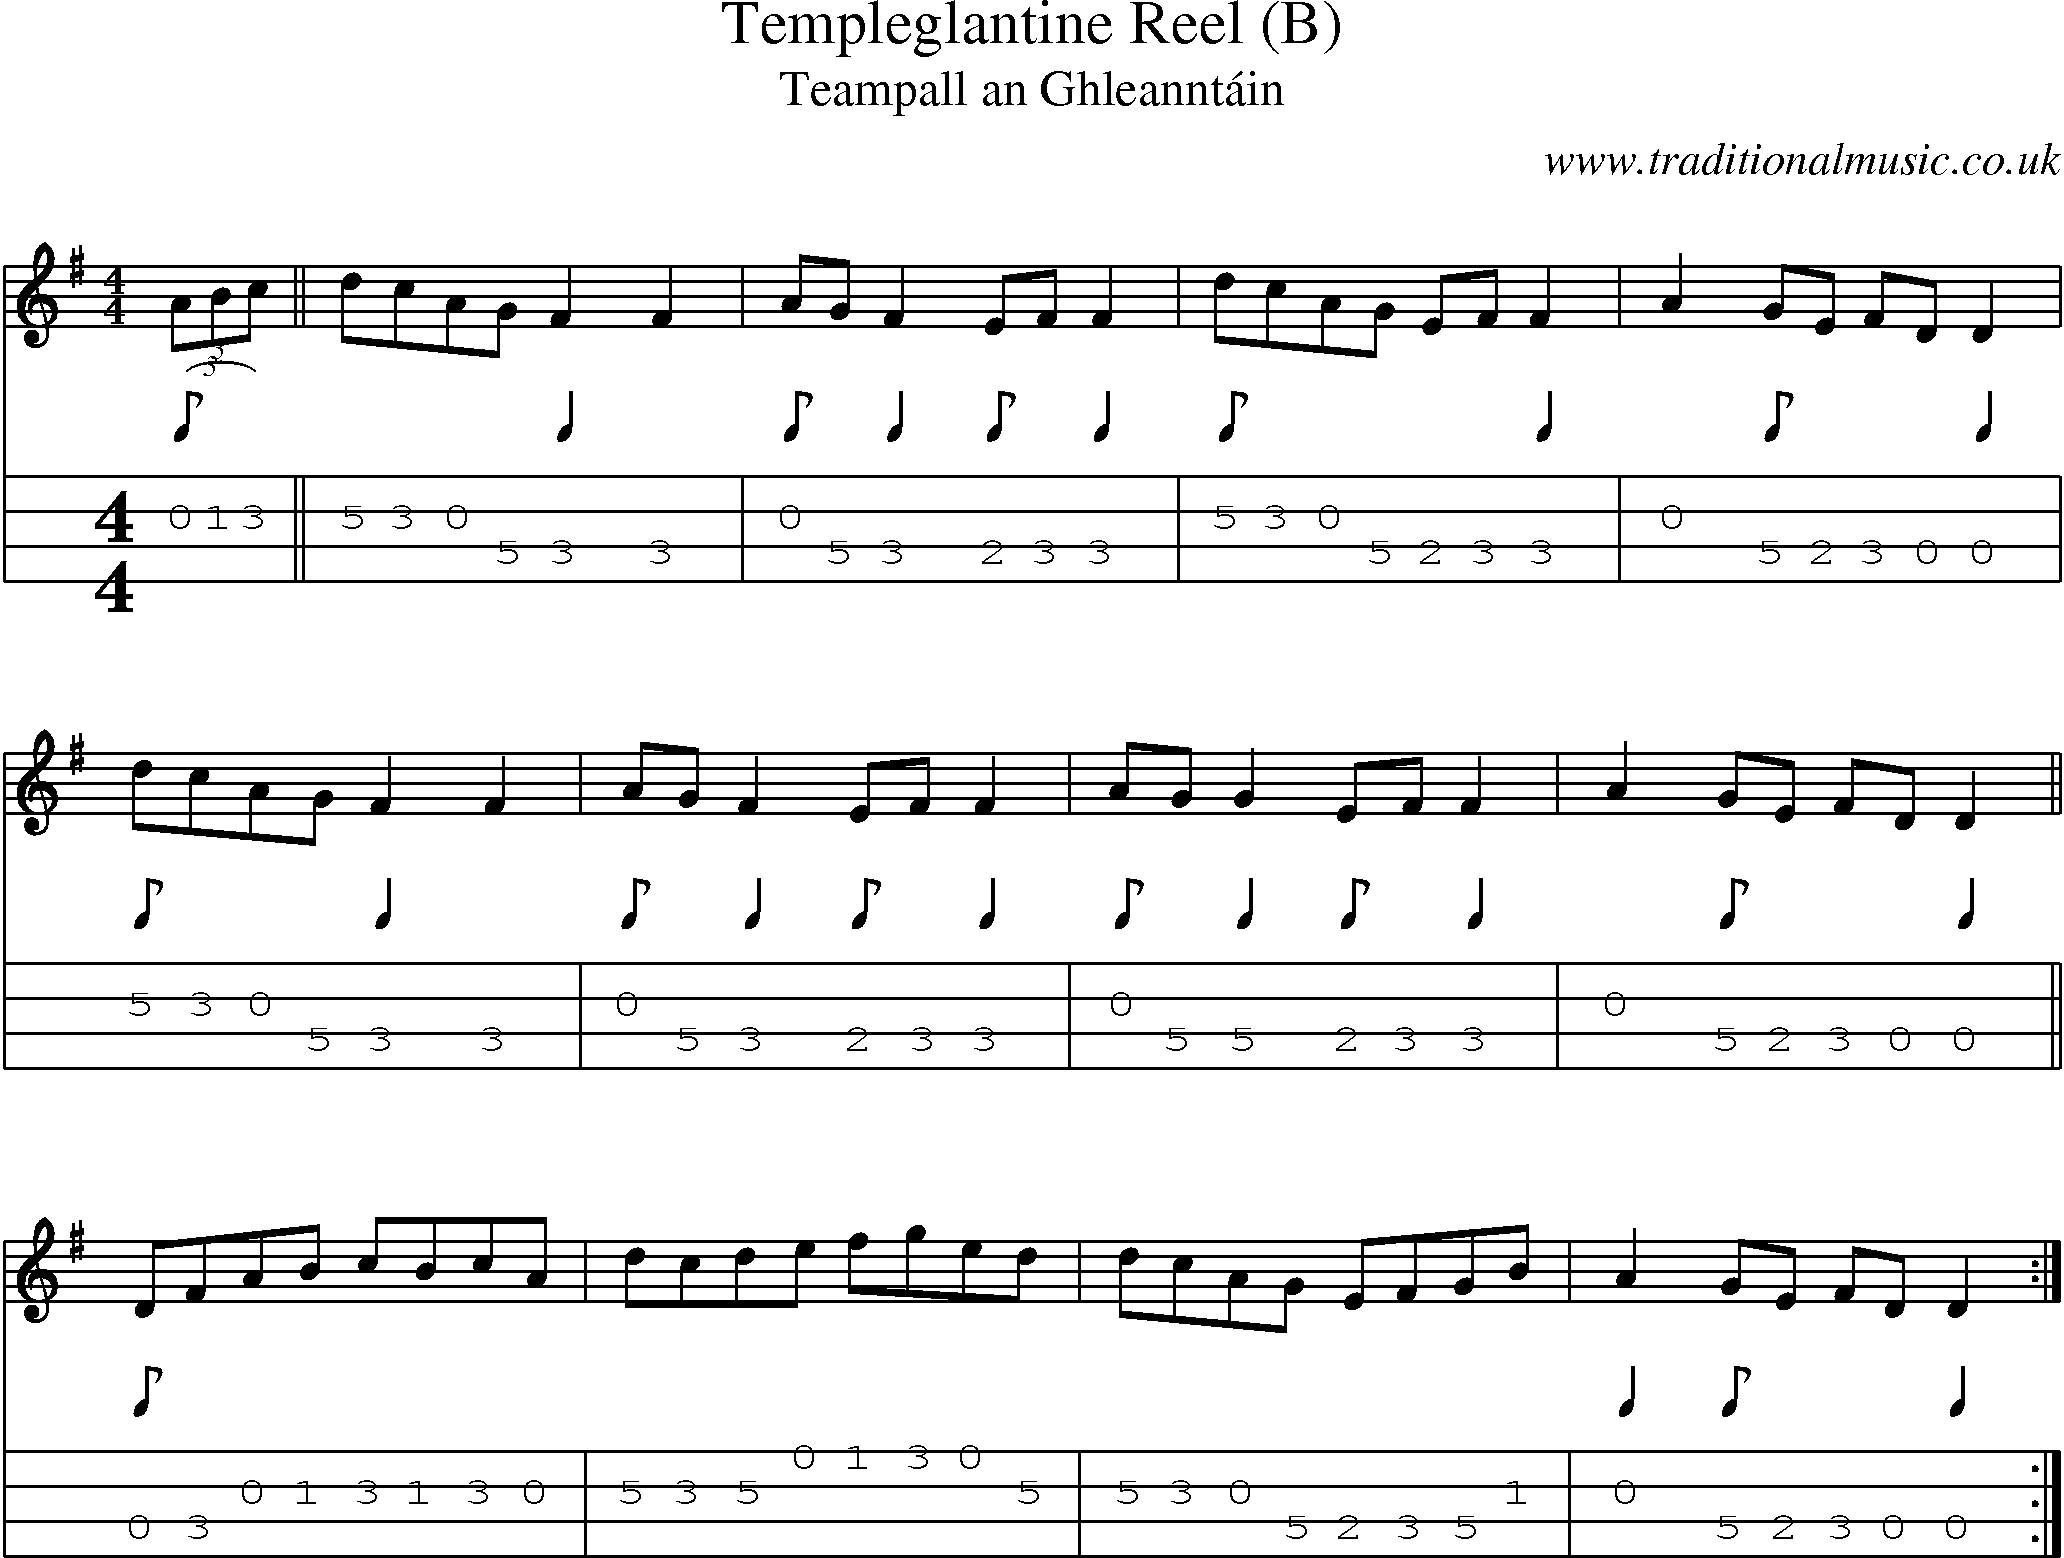 Music Score and Mandolin Tabs for Templeglantine Reel (b)